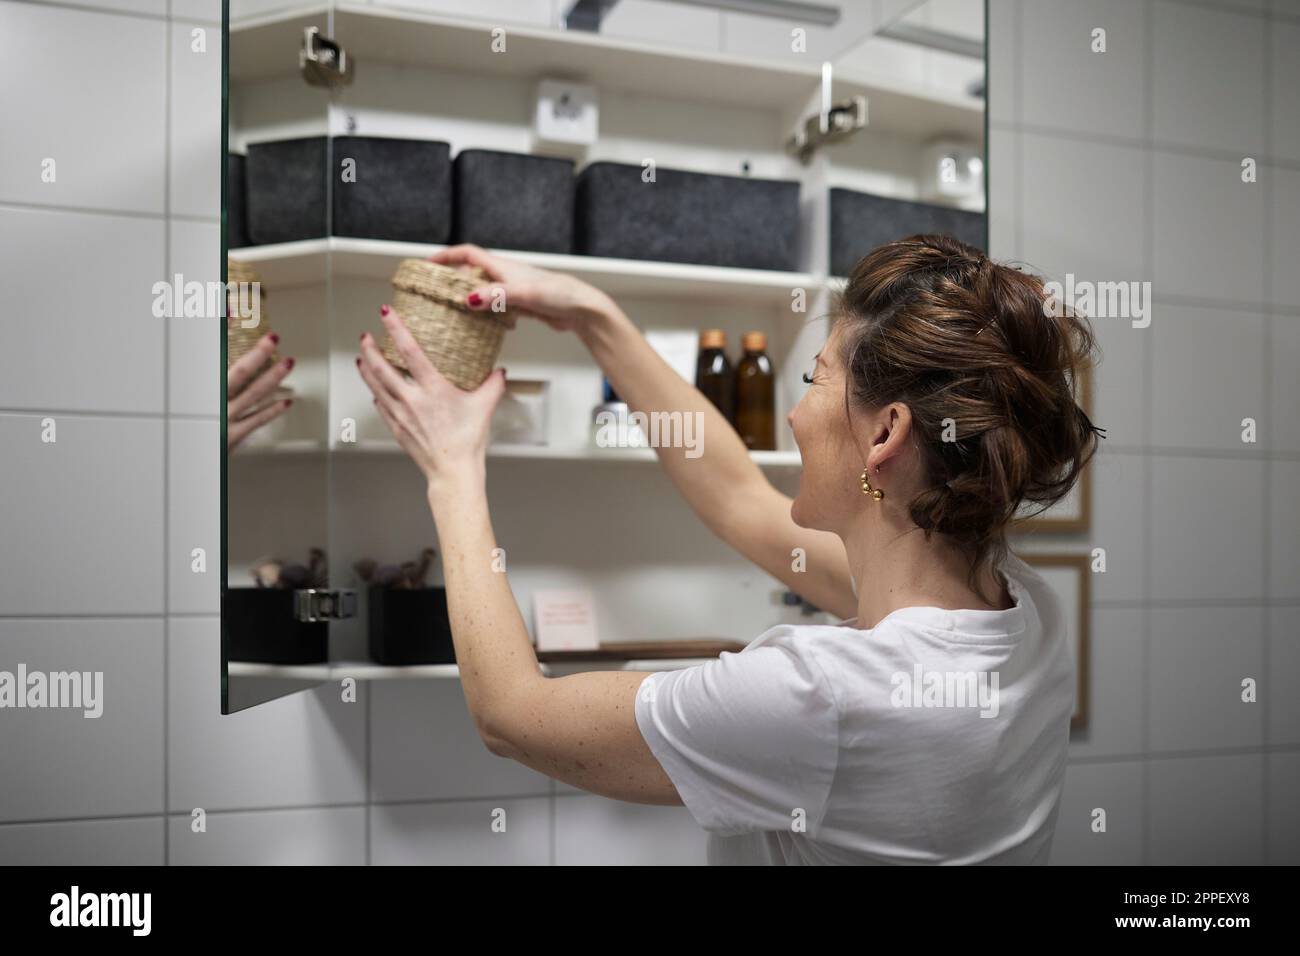 Woman putting basket in cupboard Stock Photo